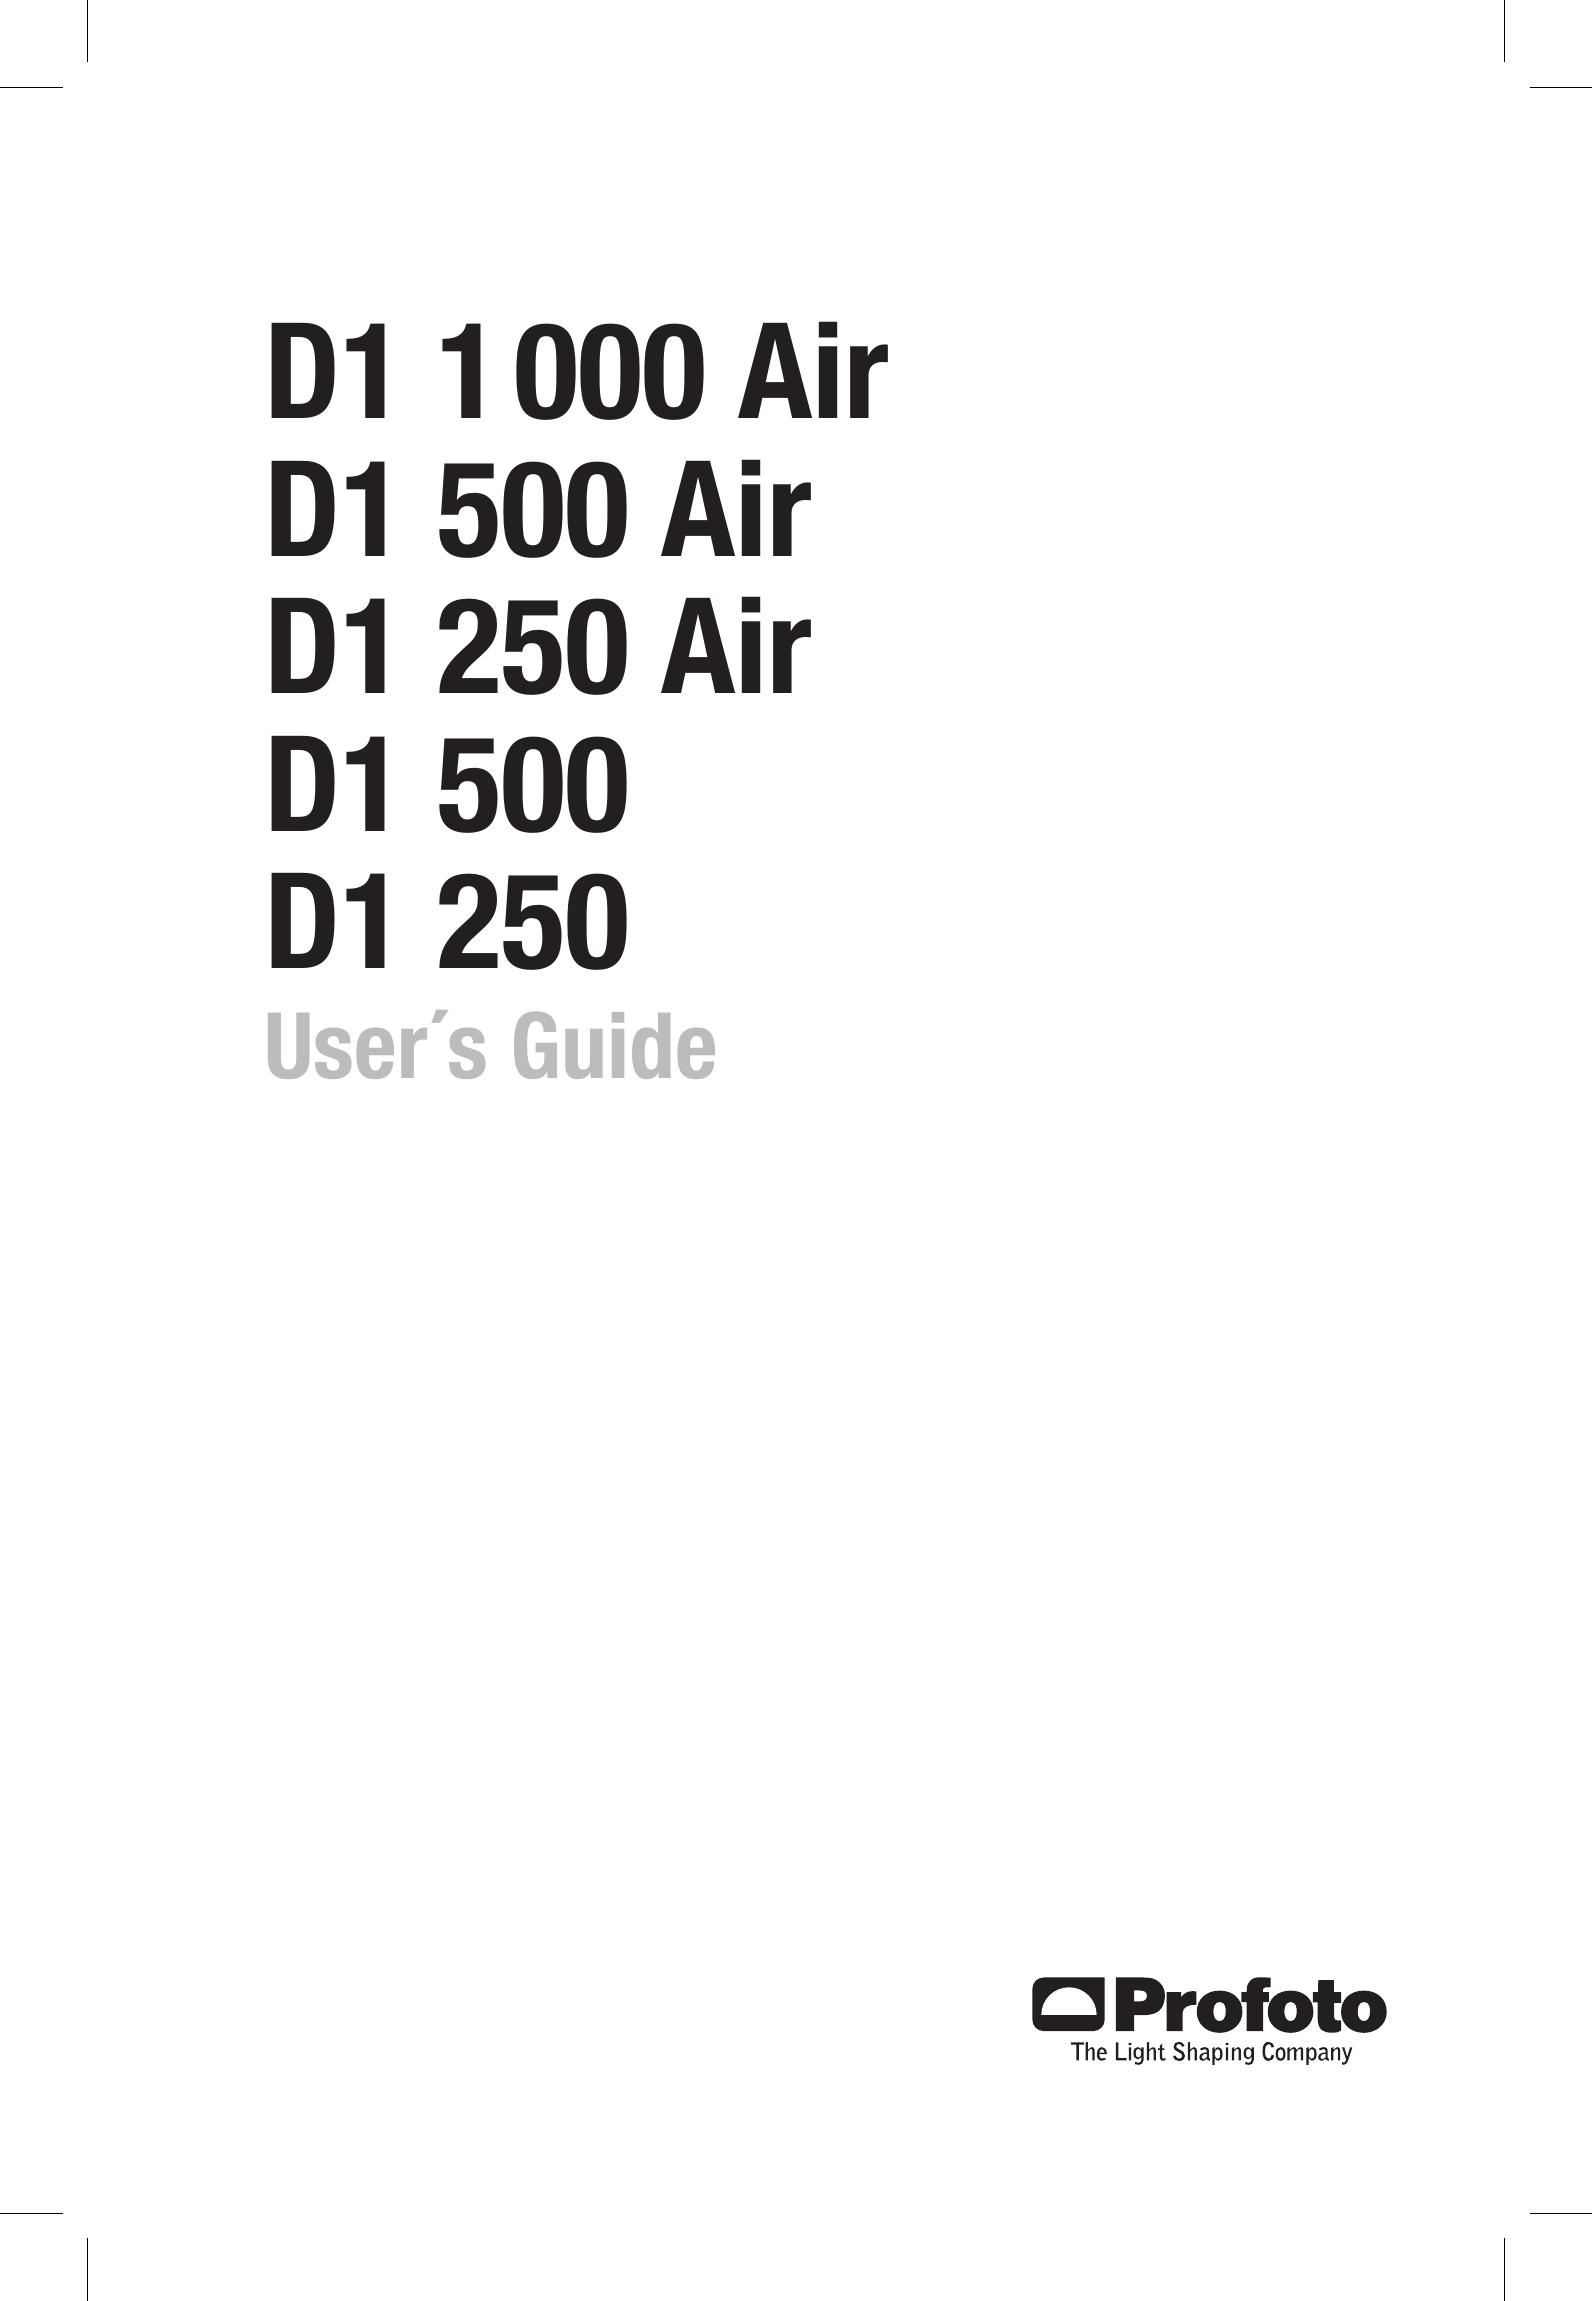 Profoto D1 500 AIR Camera Accessories User Manual